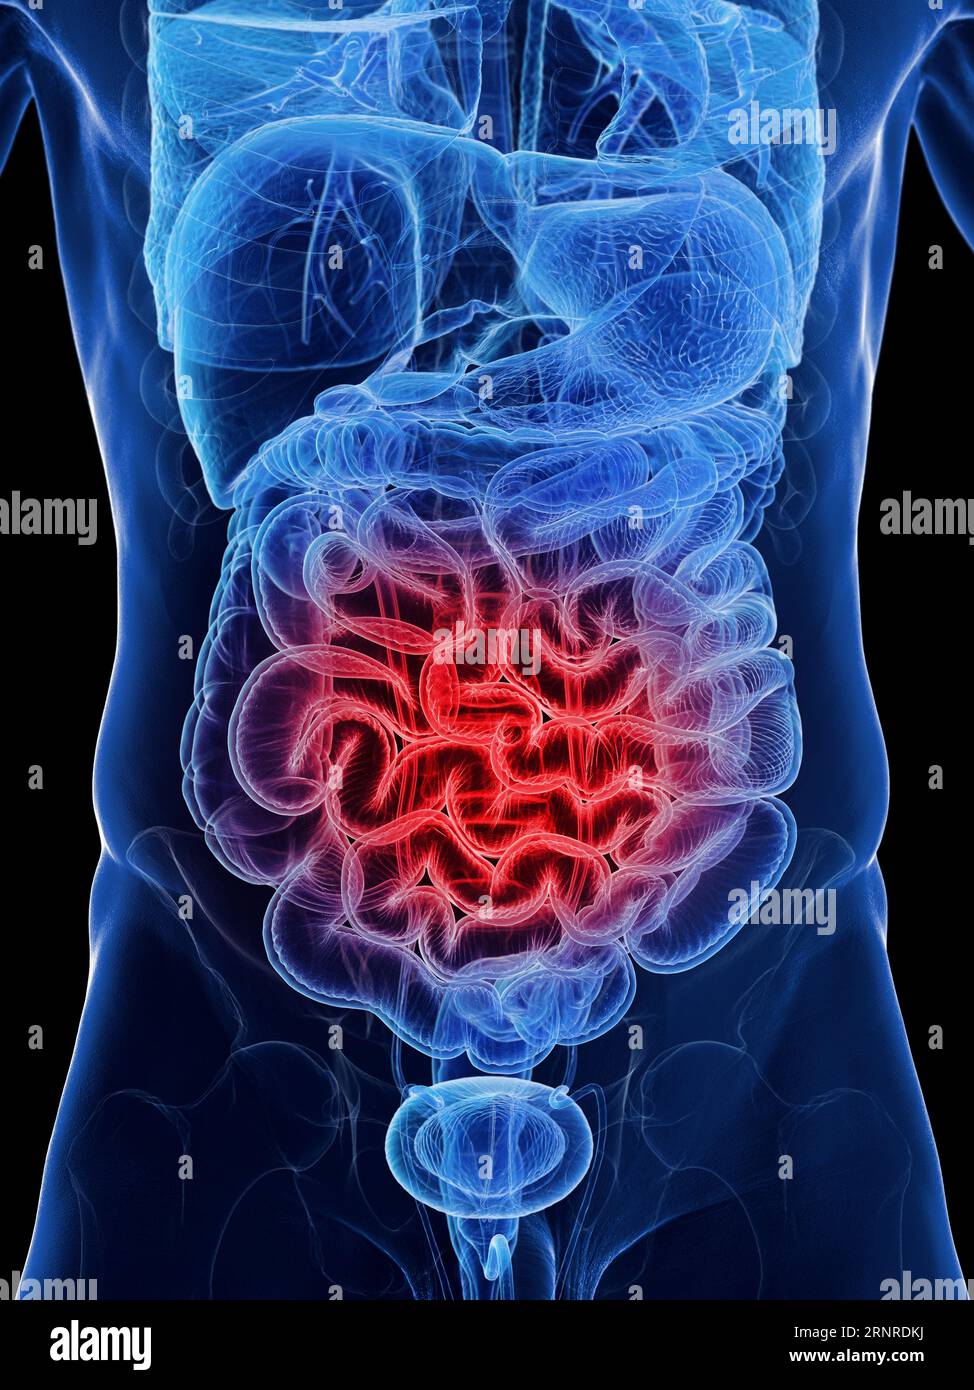 Male small intestine, illustration Stock Photo